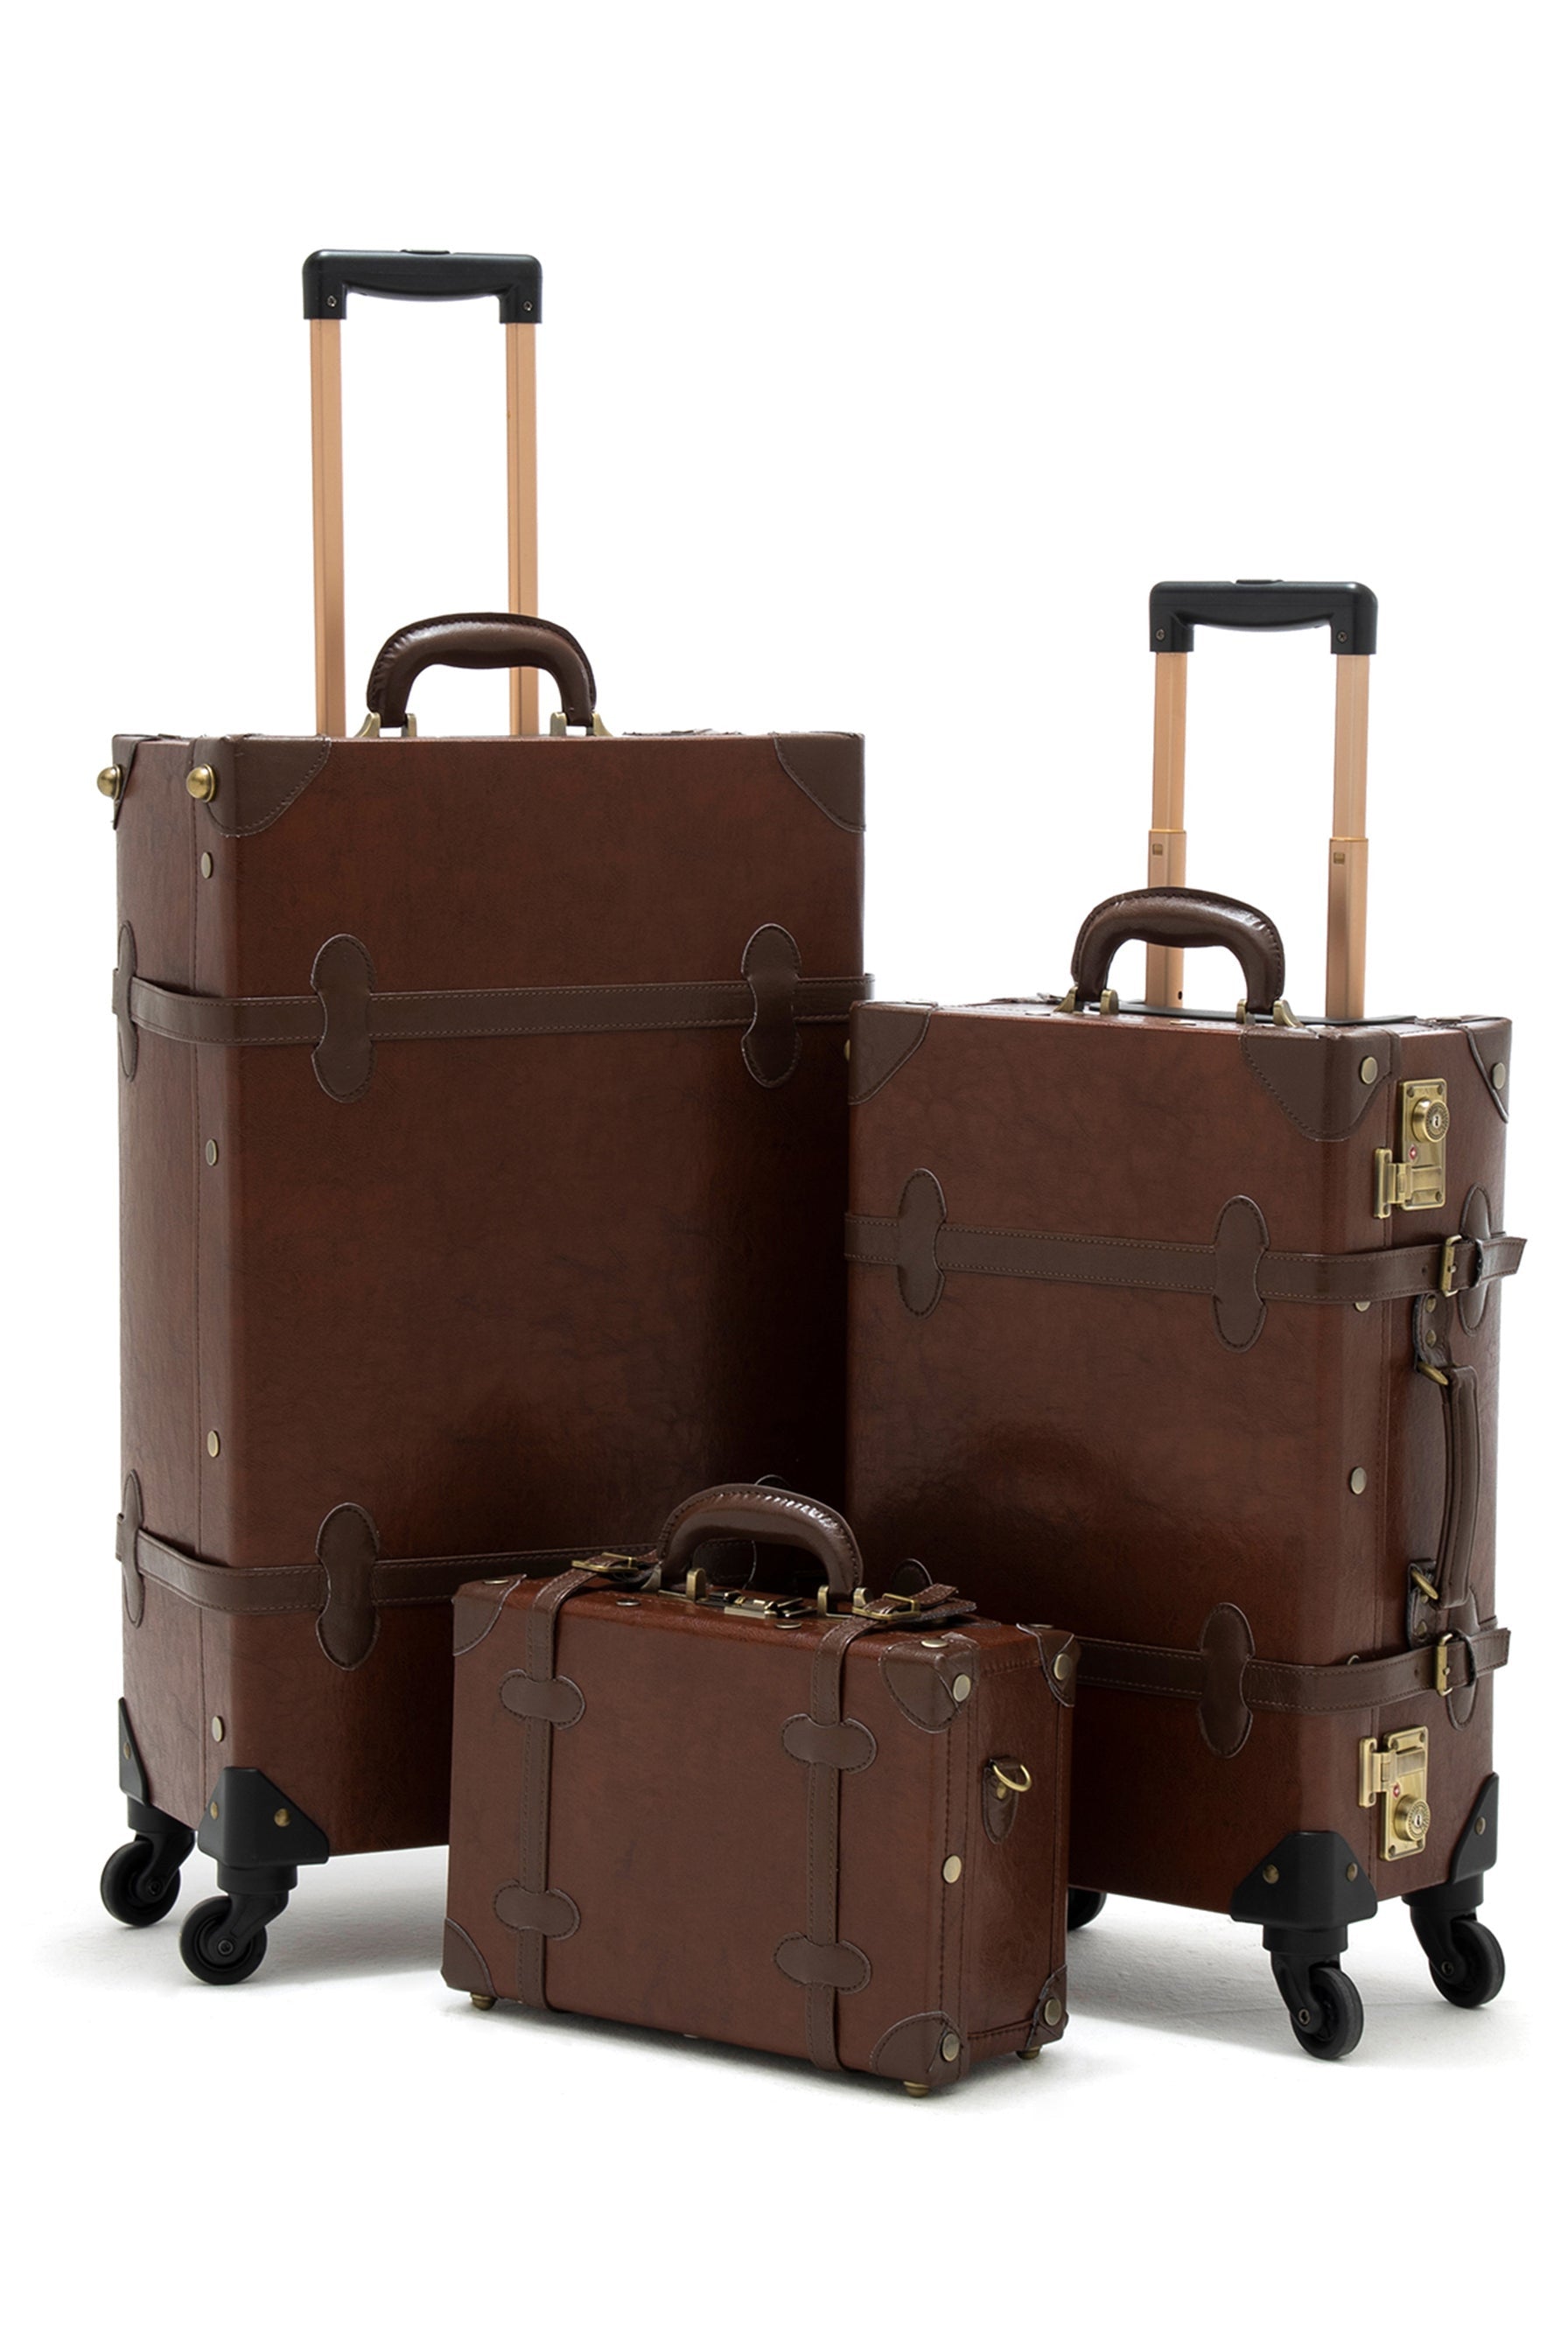 (United States) Minimalism 3 Pieces Luggage Set - Caramel Brown's